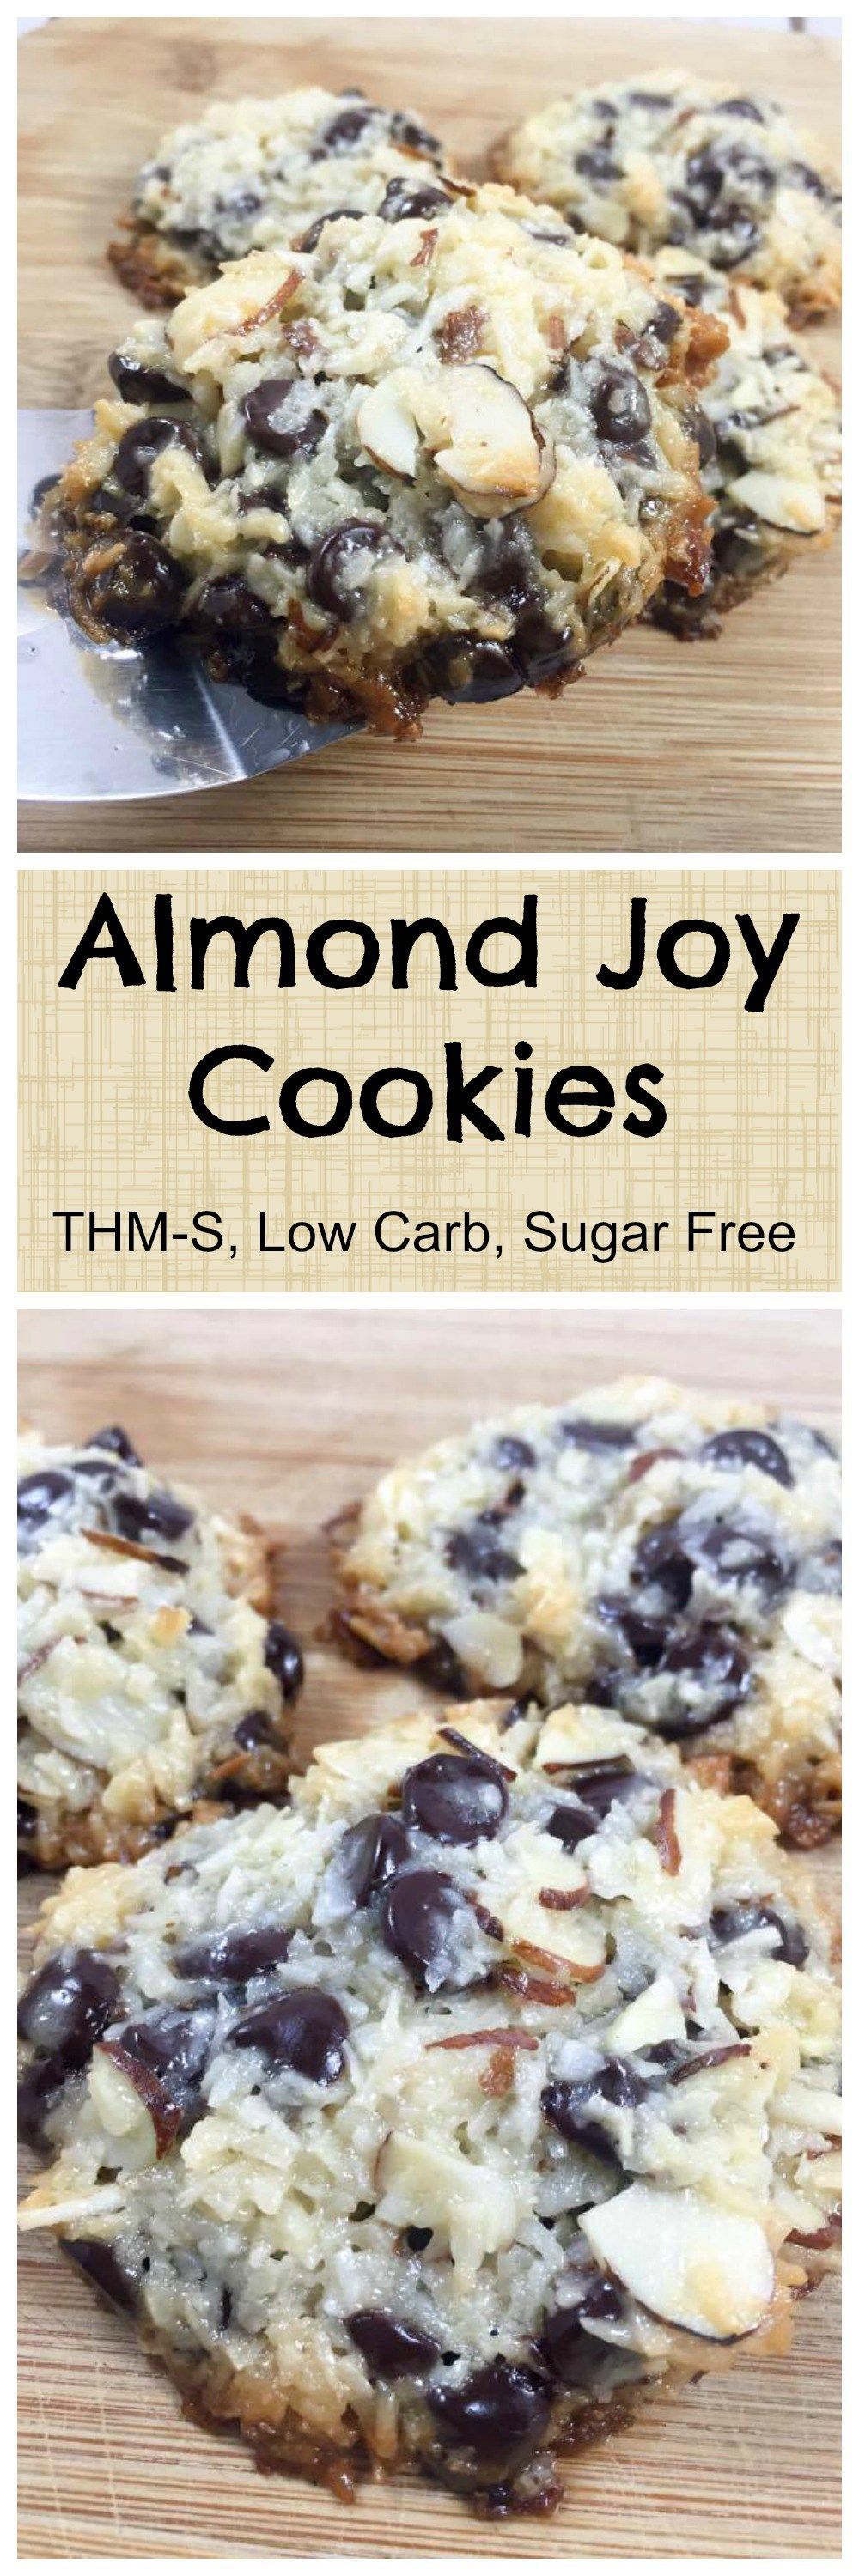 Low Carb, Sugar Free Almond Joy Cookies